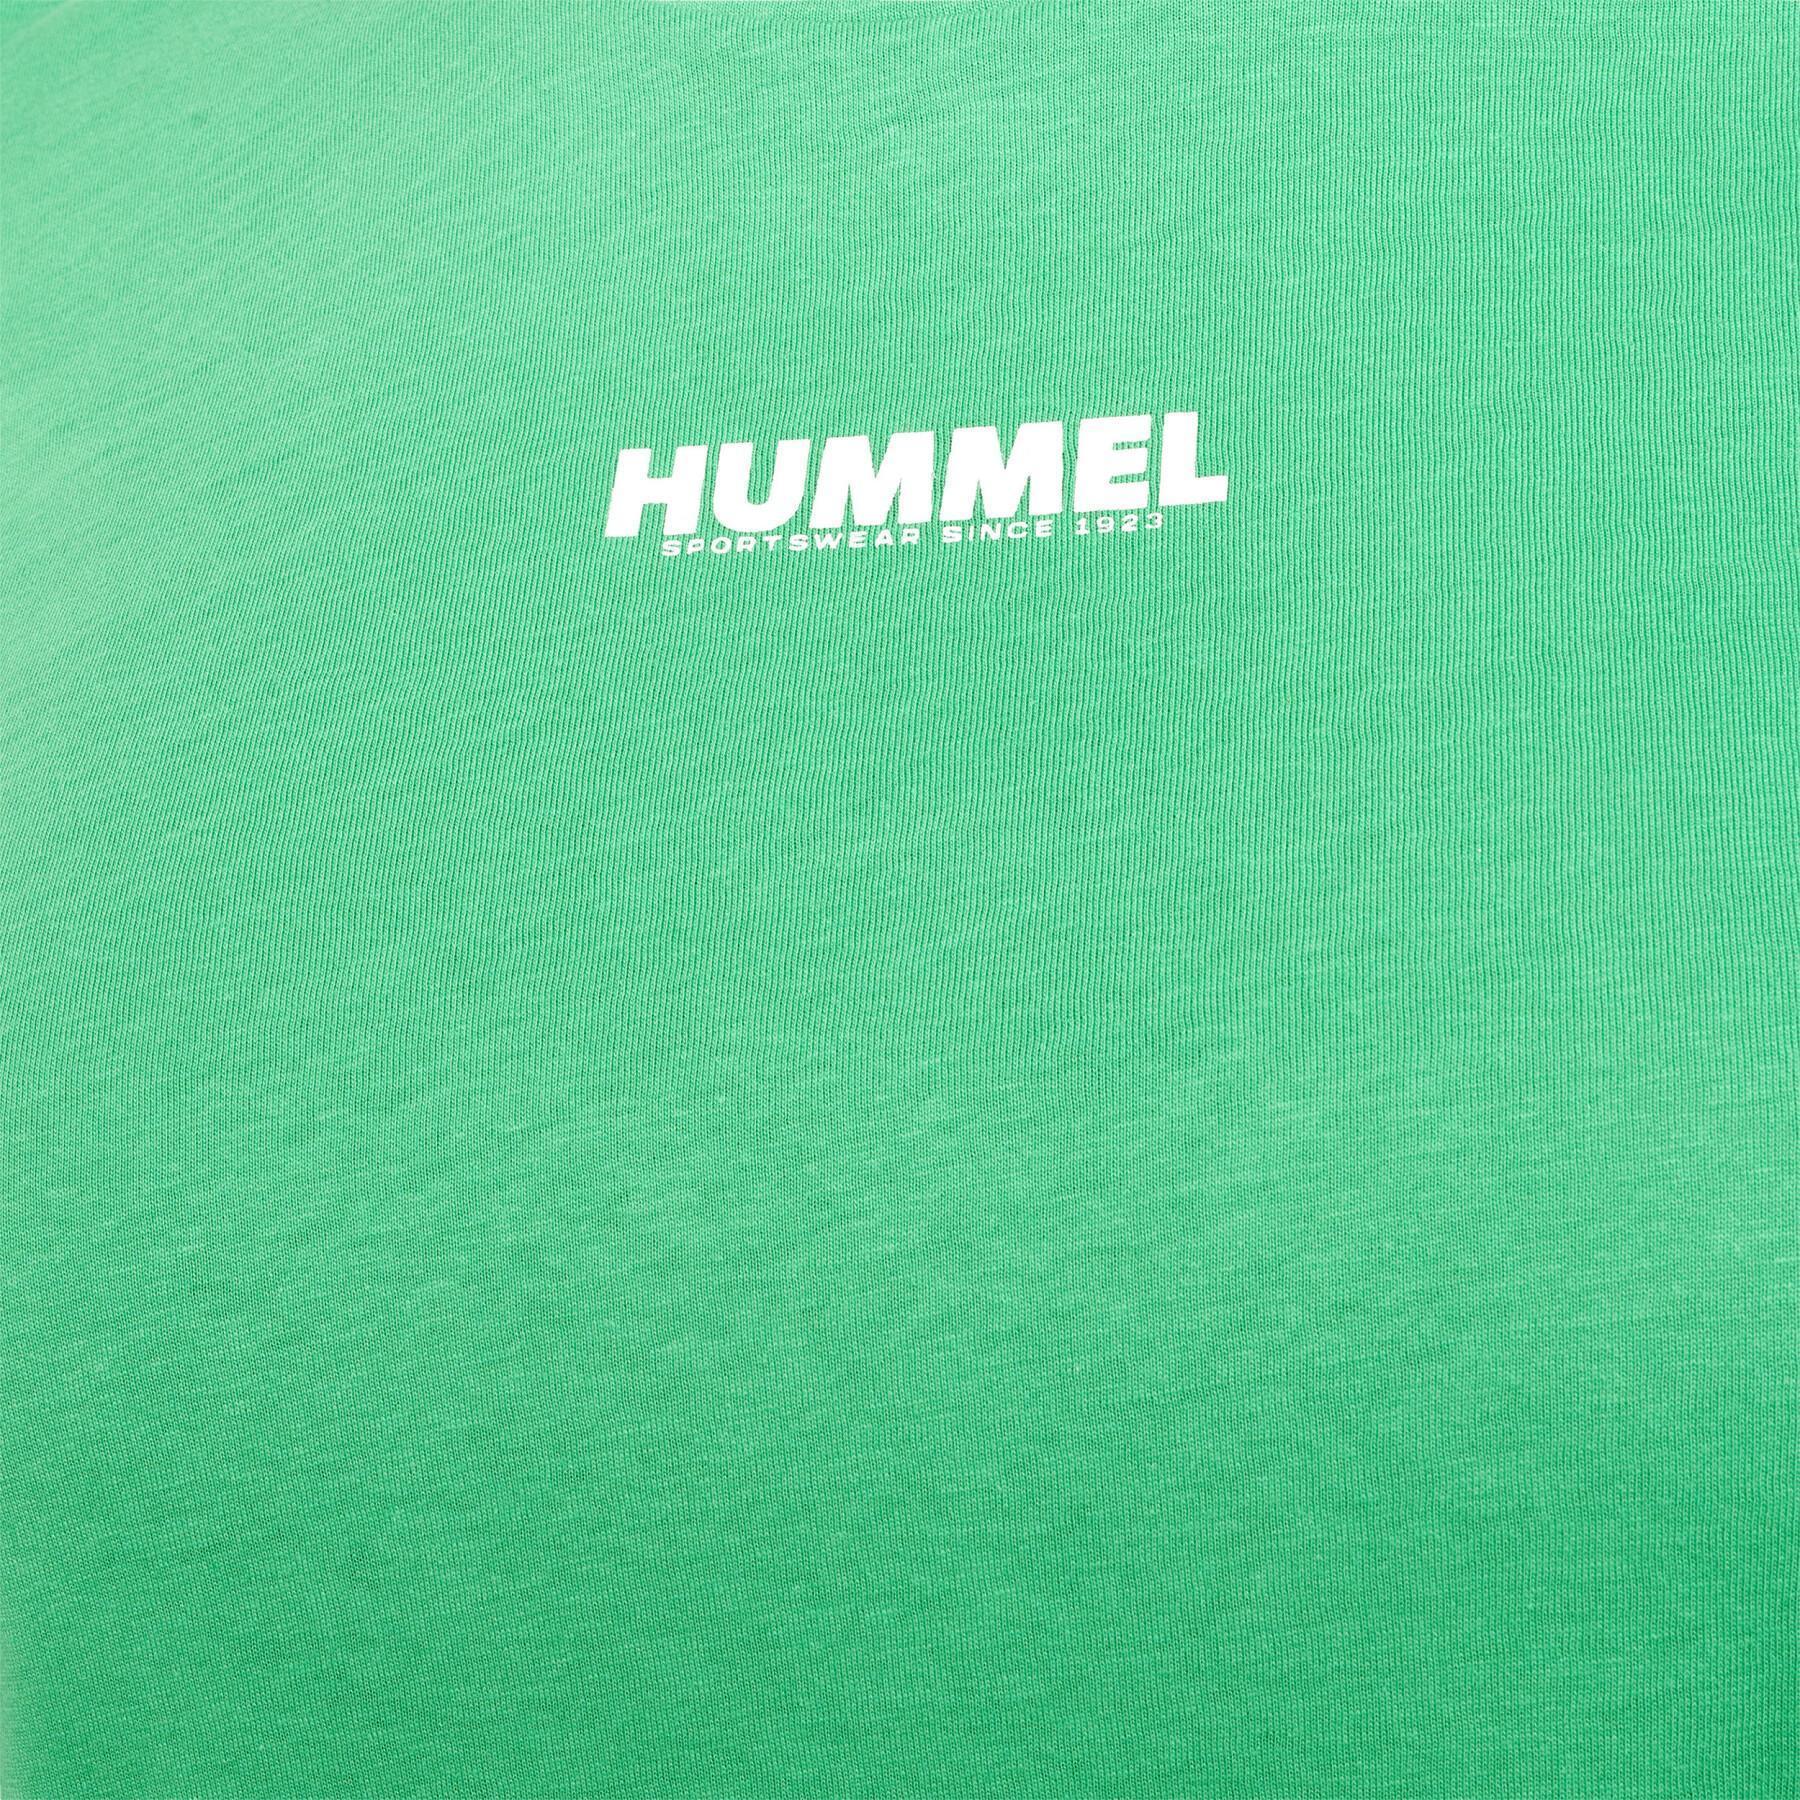 Maglietta da donna Hummel Legacy Plus